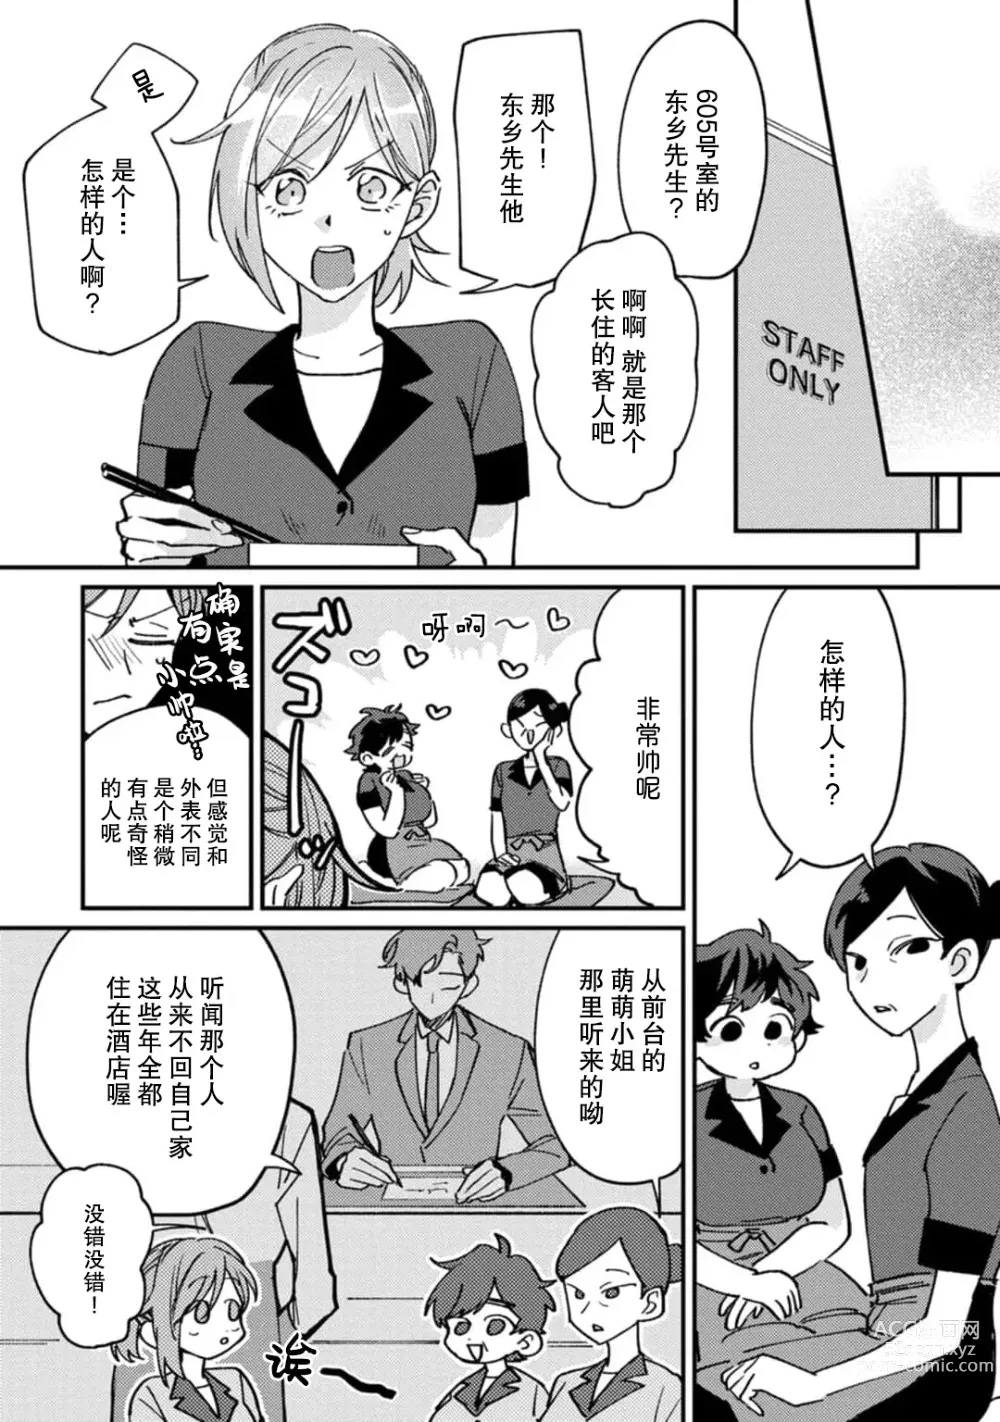 Page 17 of manga 请勿打扰！酒店客房服务员被常客绅士夺走第一次 1-3